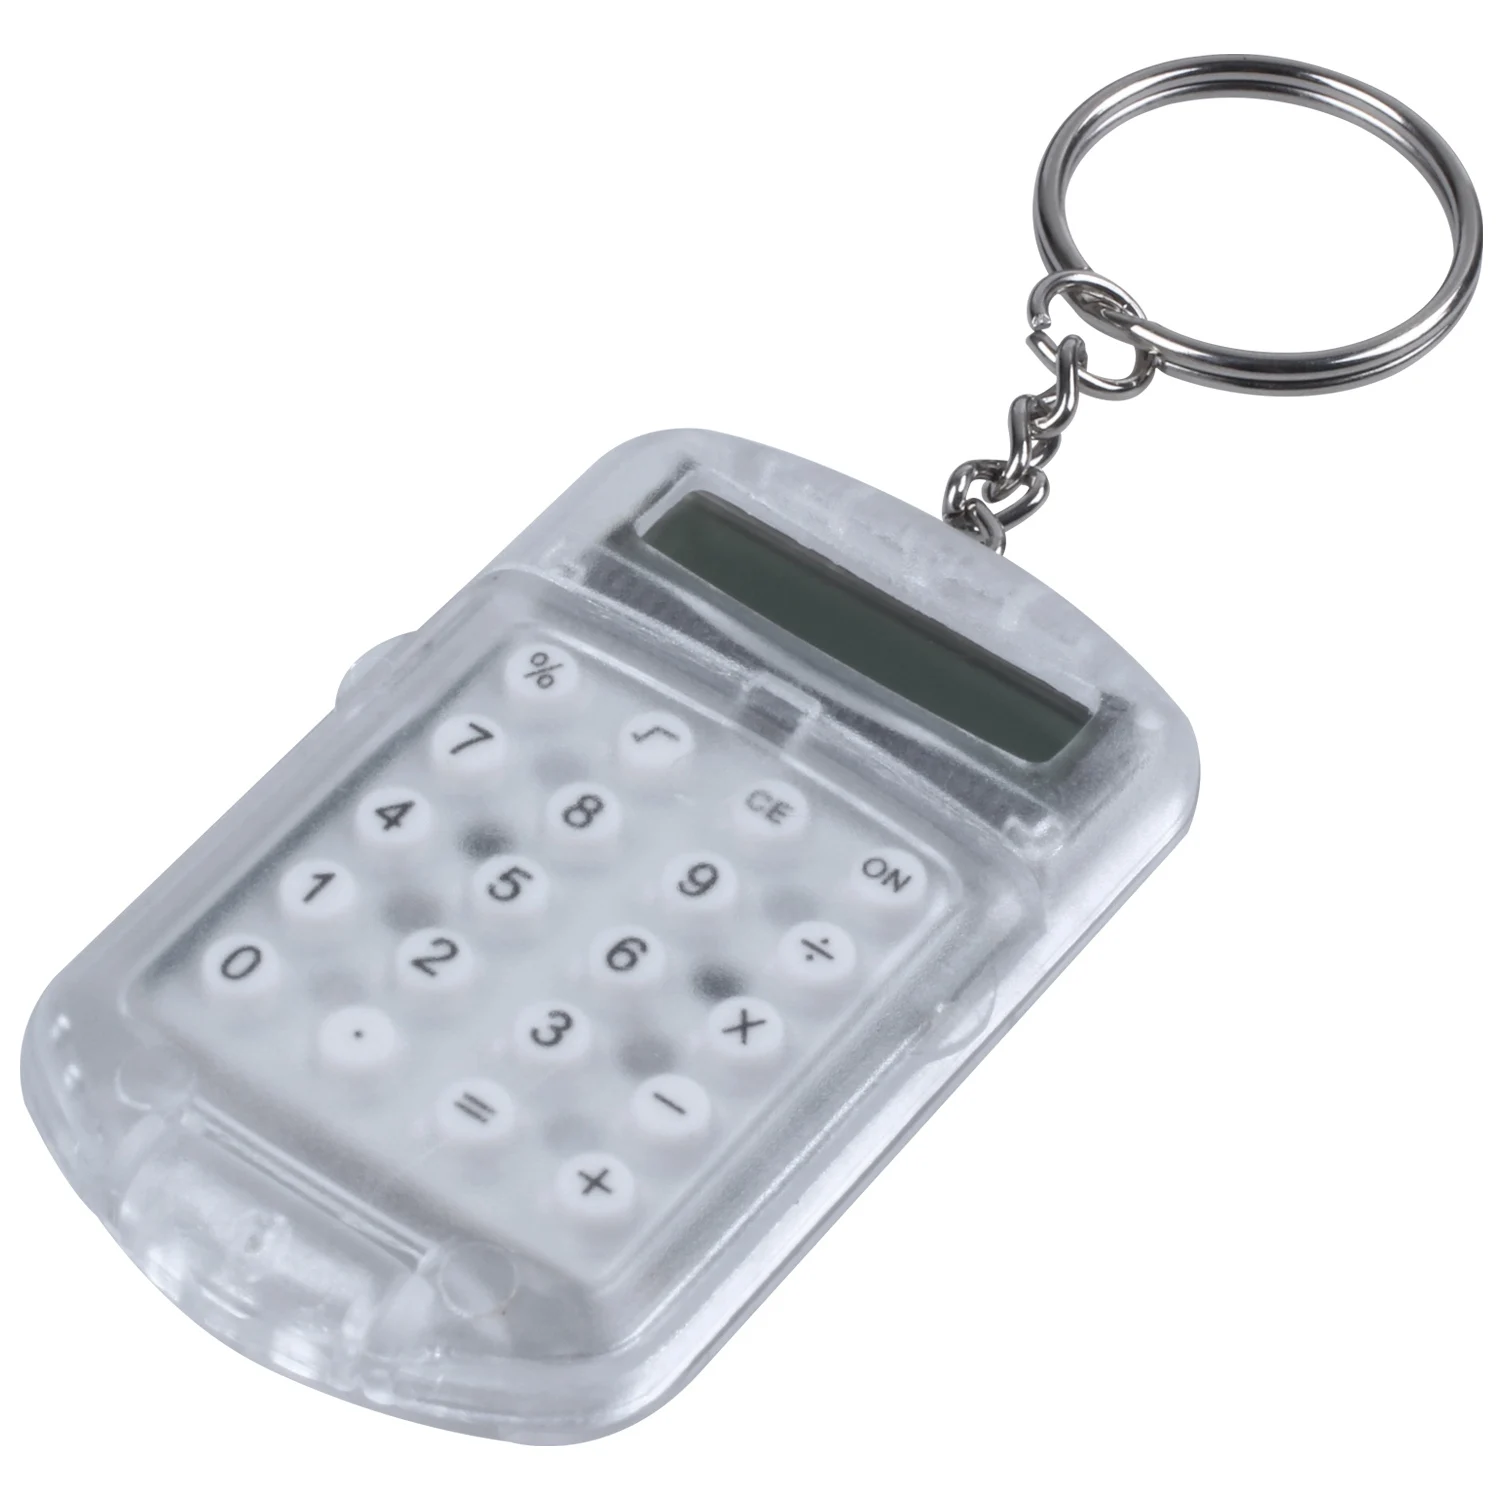 

Прозрачный пластиковый корпус 8 цифр электронный мини-калькулятор w брелок